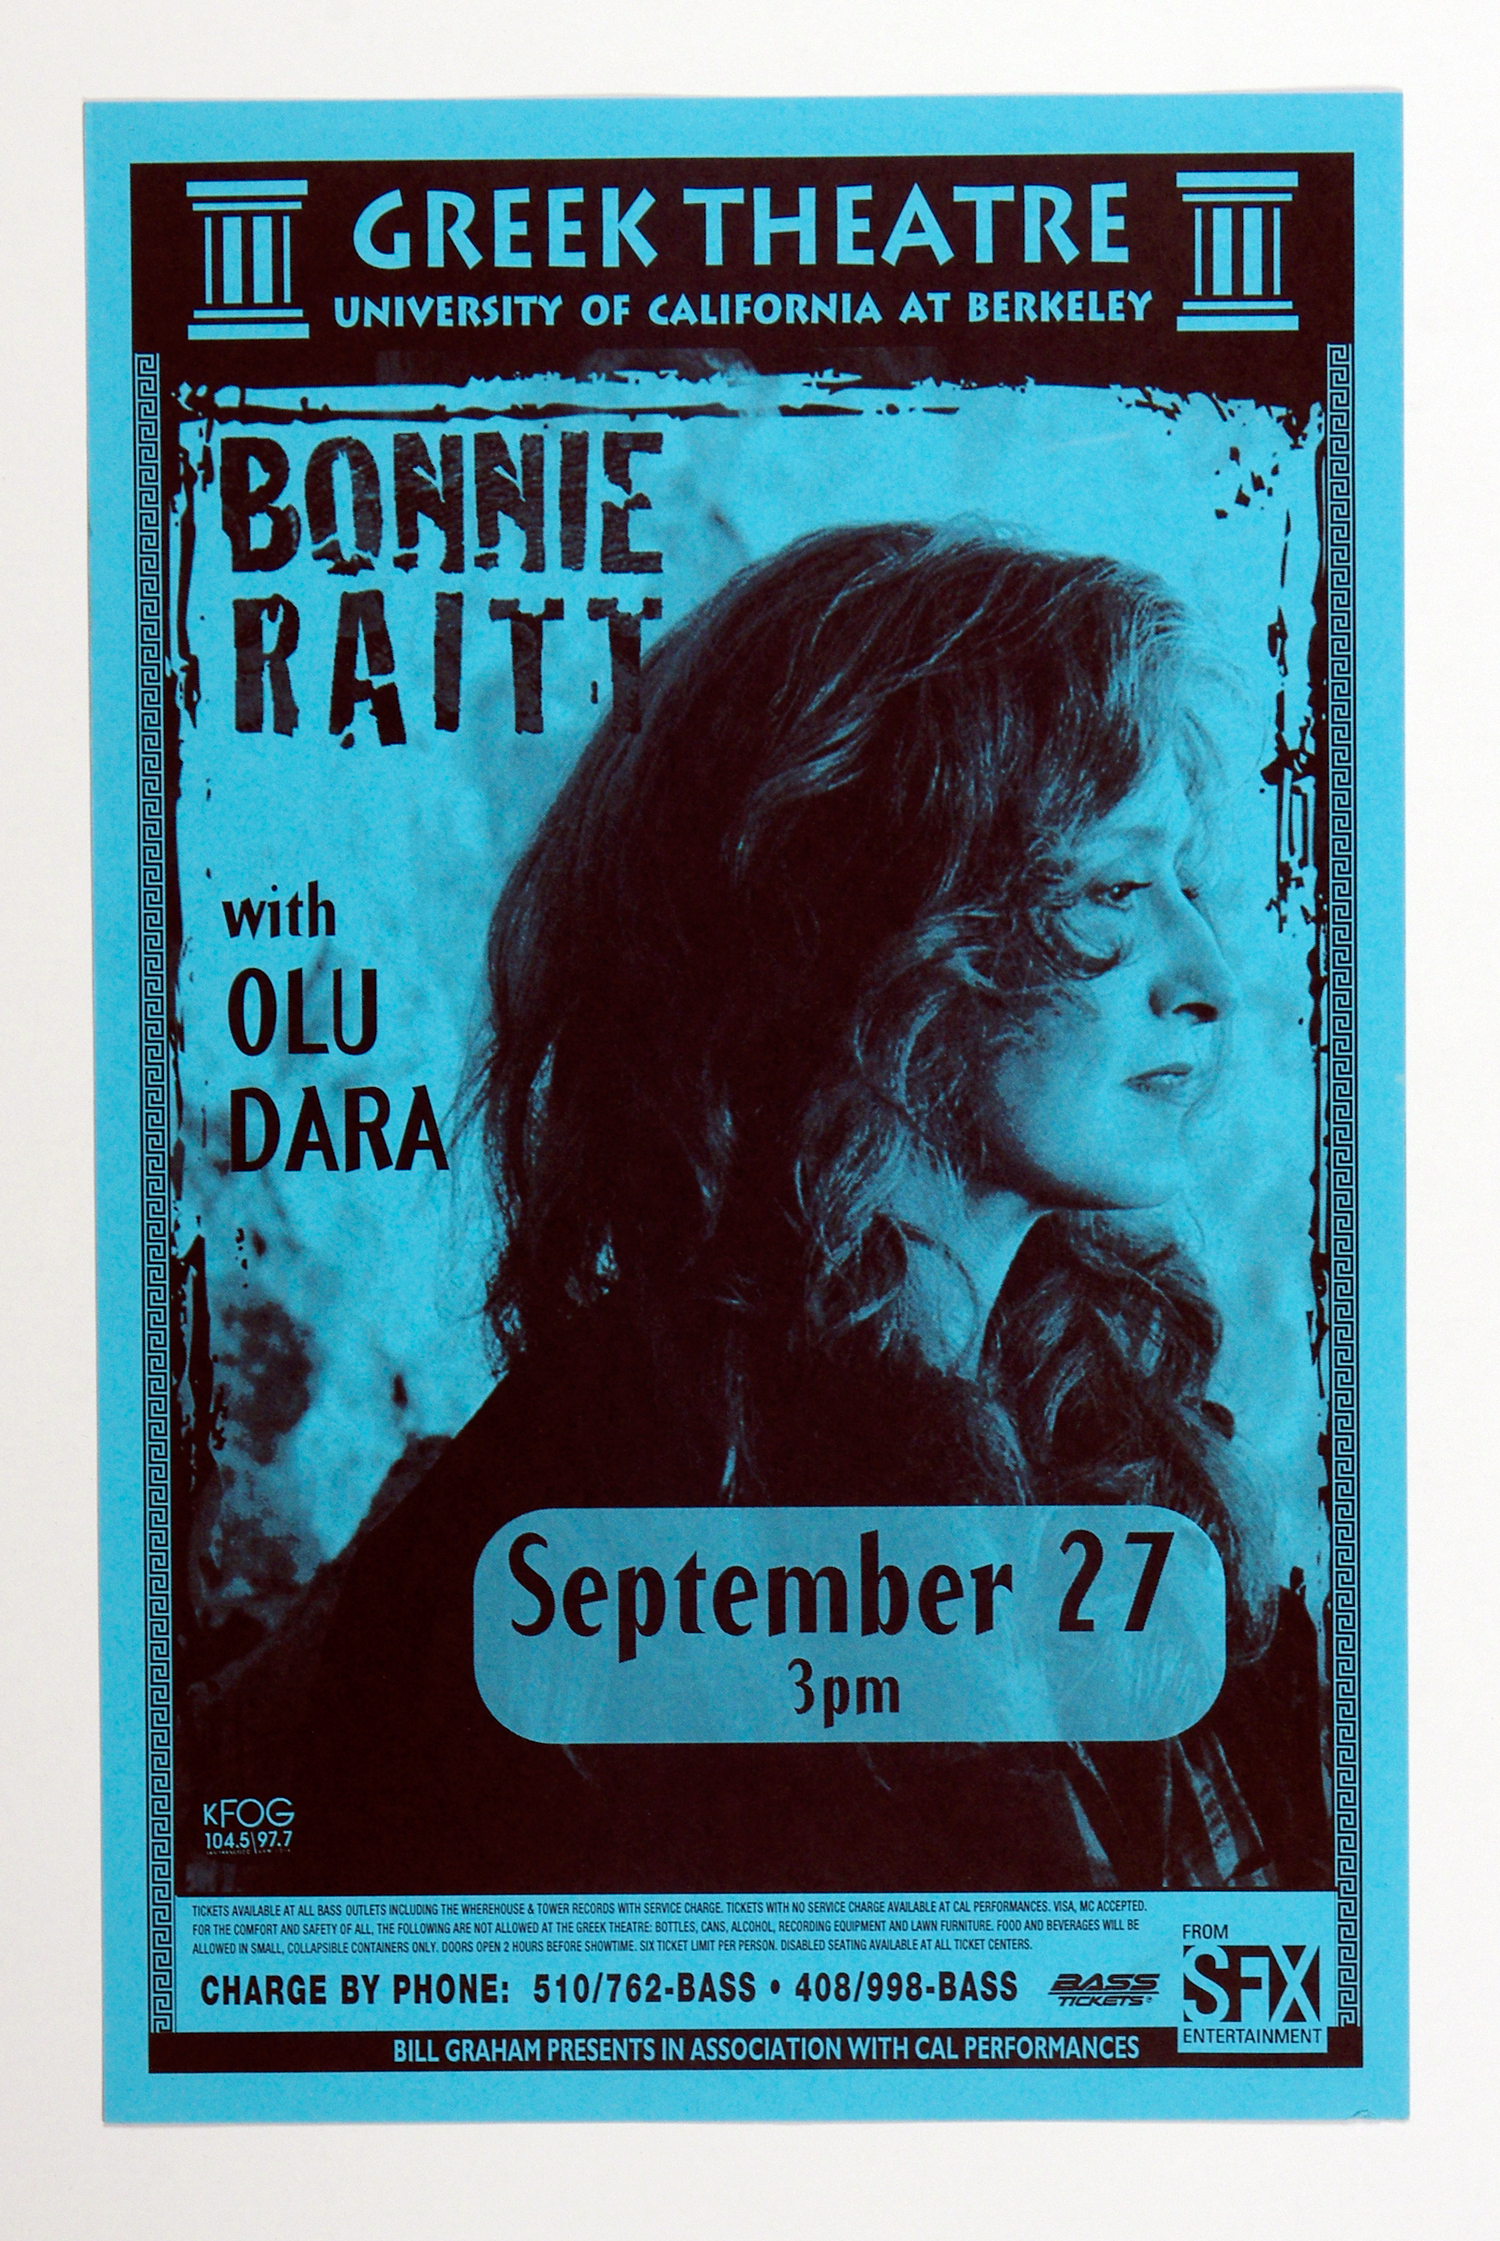 Bonnie Raitt Poster 1998 Sep 27 Greek Theatre Berkeley